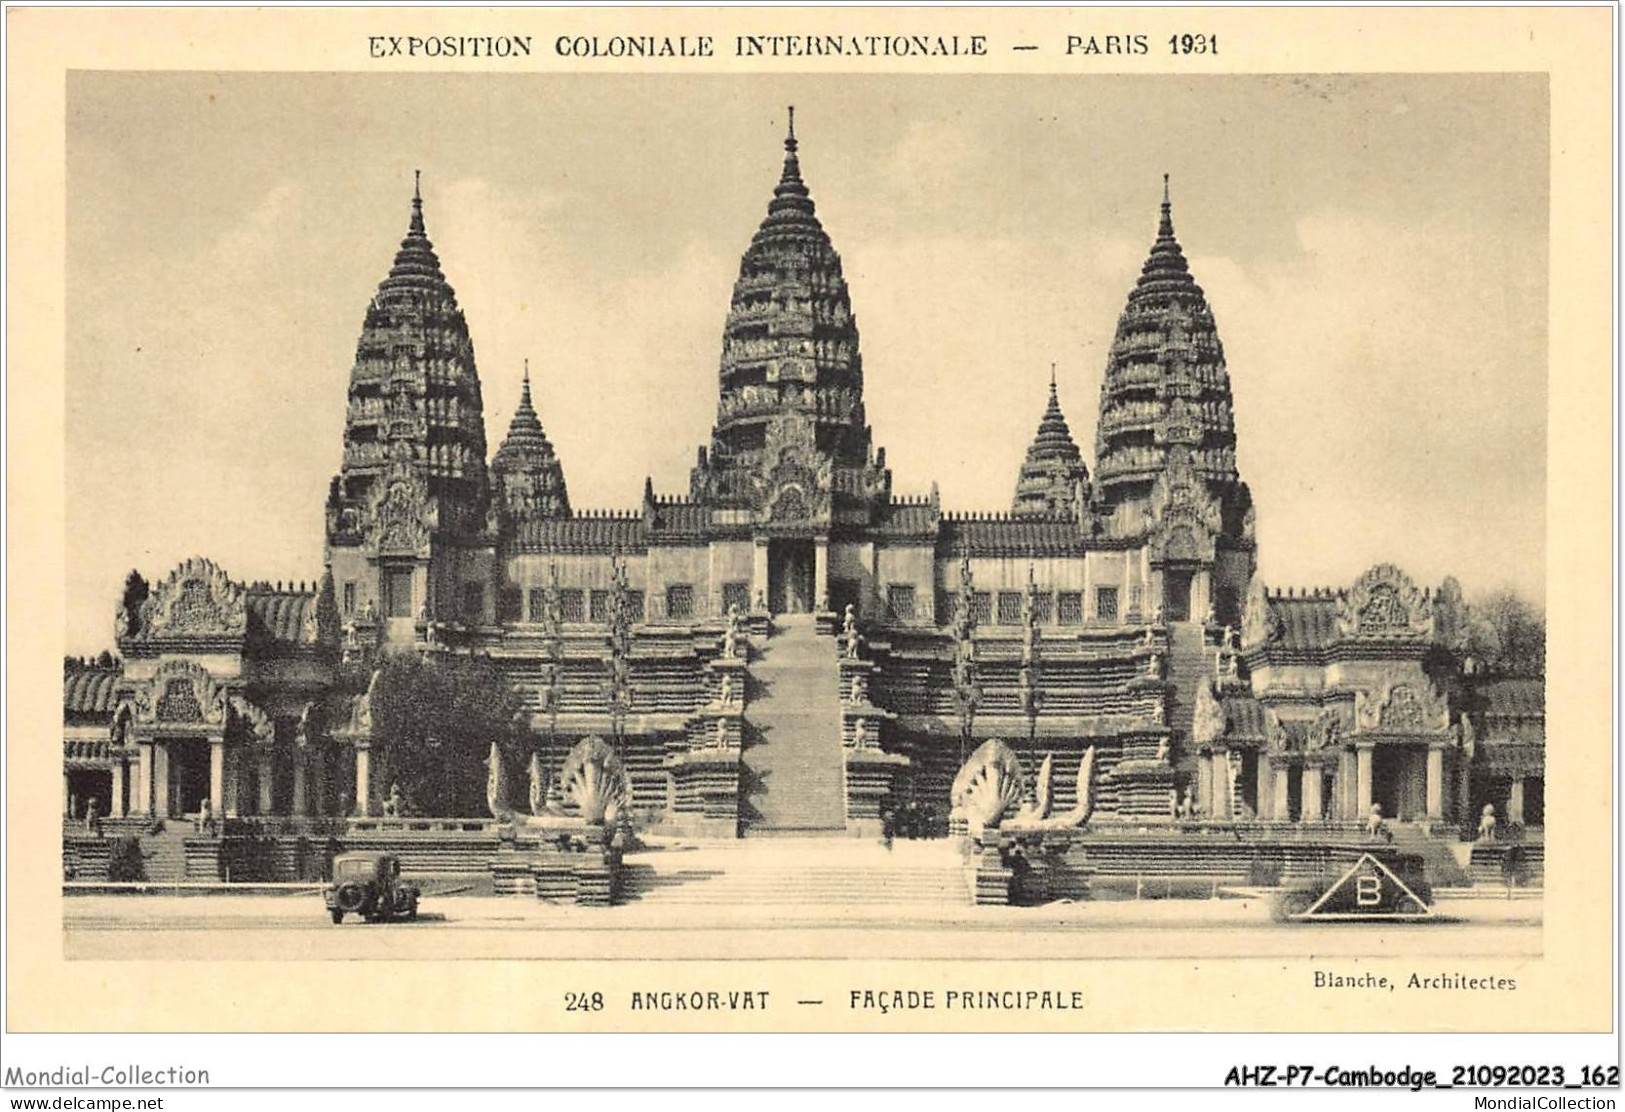 AHZP7-CAMBODGE-0677 - EXPOSITION COLONIALE INTERNATIONALE - PARIS 1931 - ANGKOR-VAT - FACADE PRINCIPALE - Cambodia